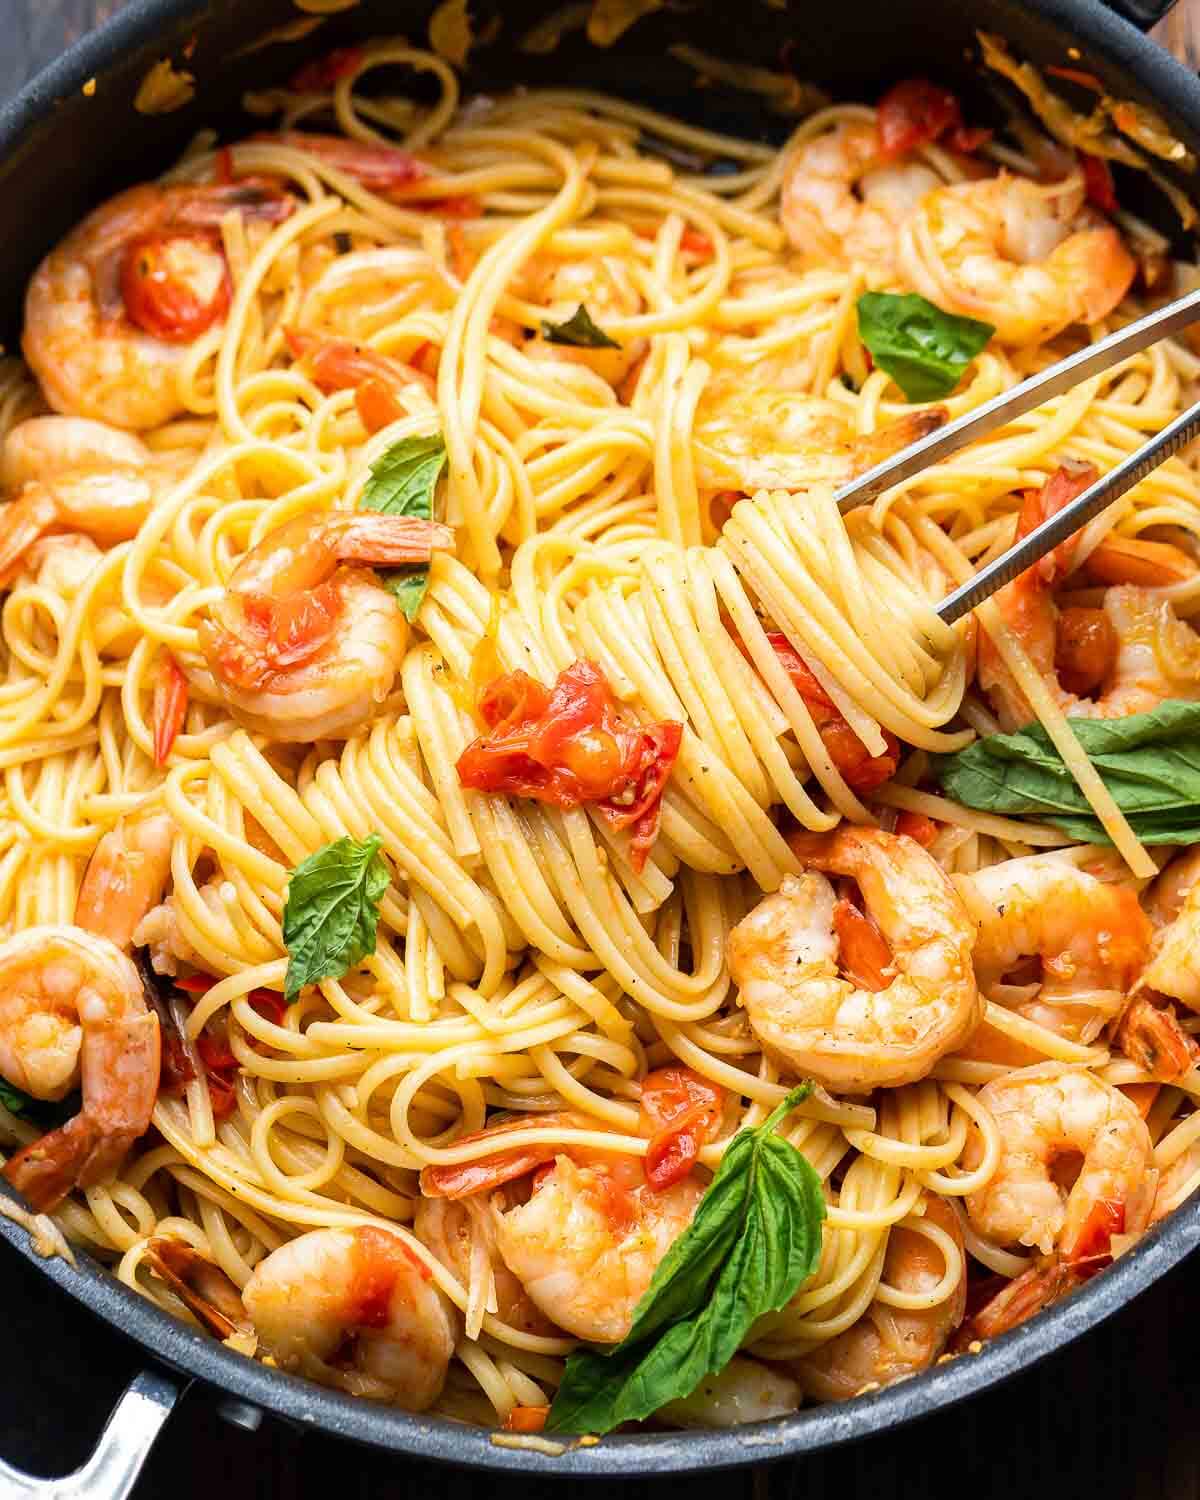 Shrimp tomato basil pasta in black pan with kitchen tweezers.